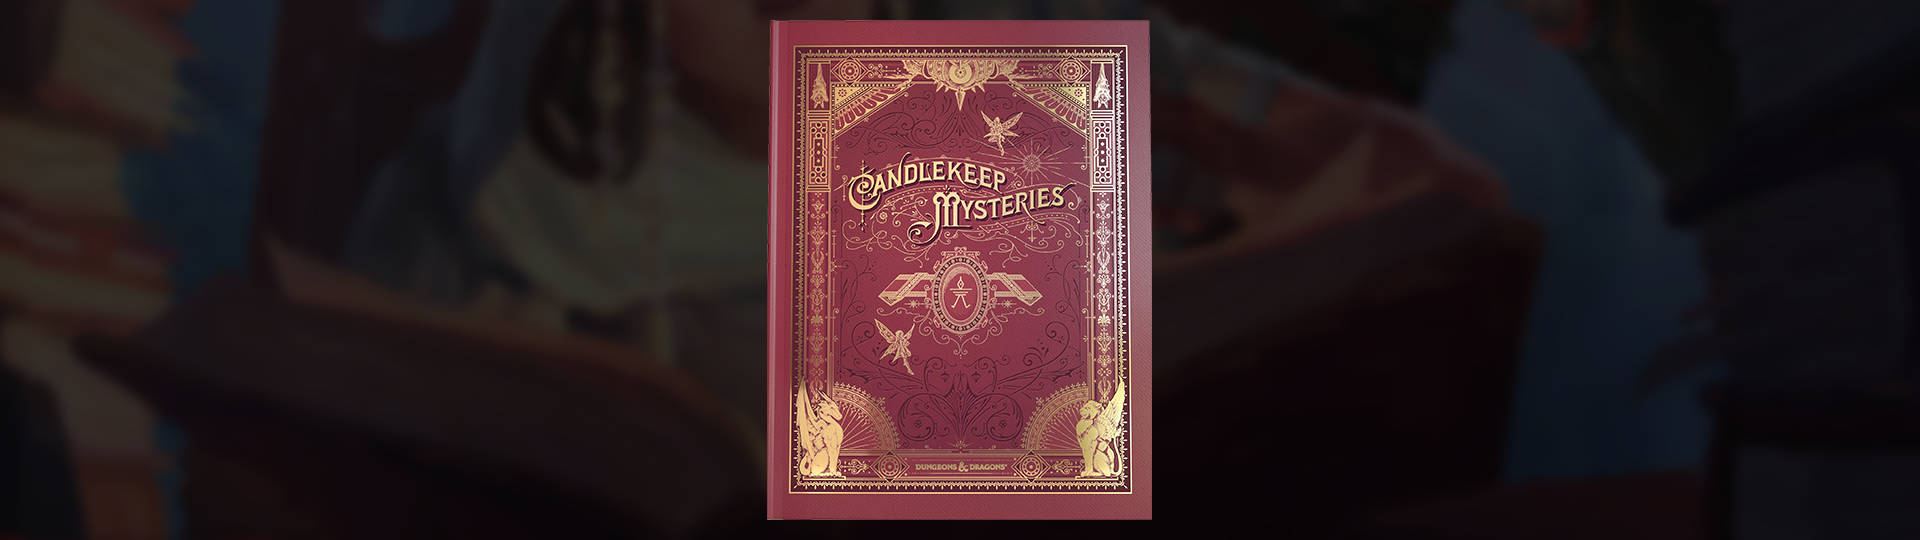 Dungeons & Dragons Candlekeep Mysteries slice